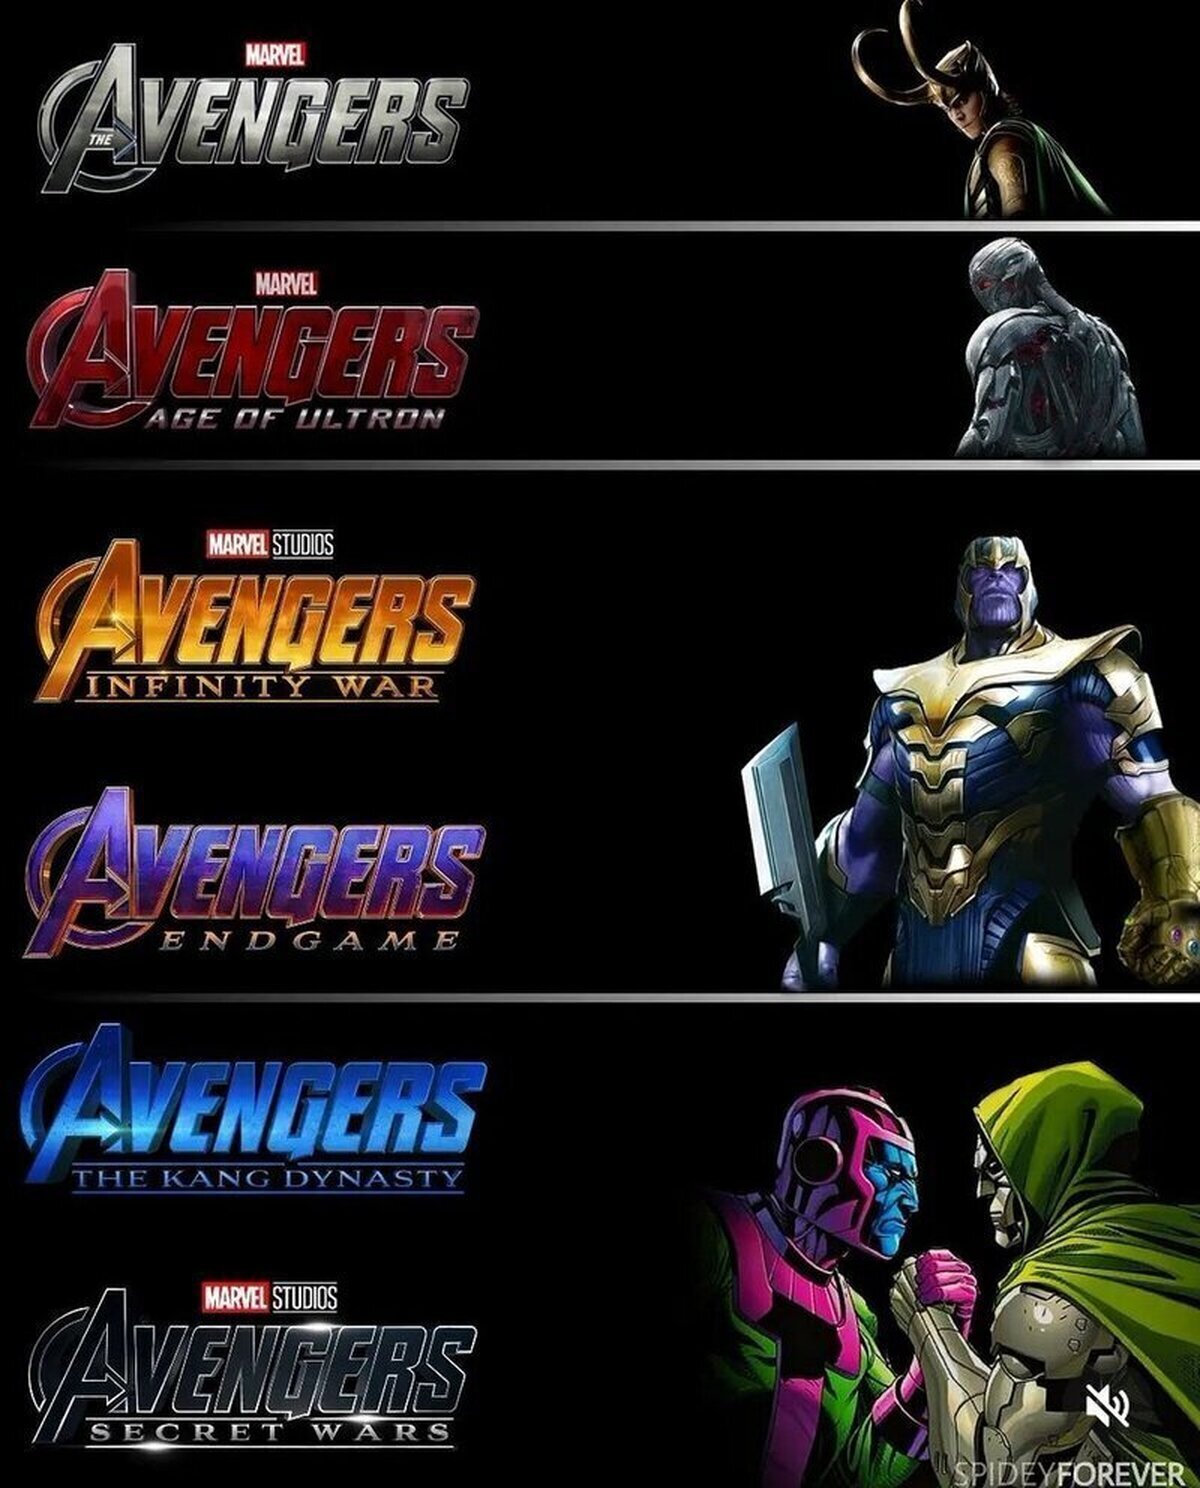 Los villanos a los que se han tenido que enfrentar los Avengers en cada fase de Marvel ?#AvengersTheKangDynasty #AvengersSecretWars  